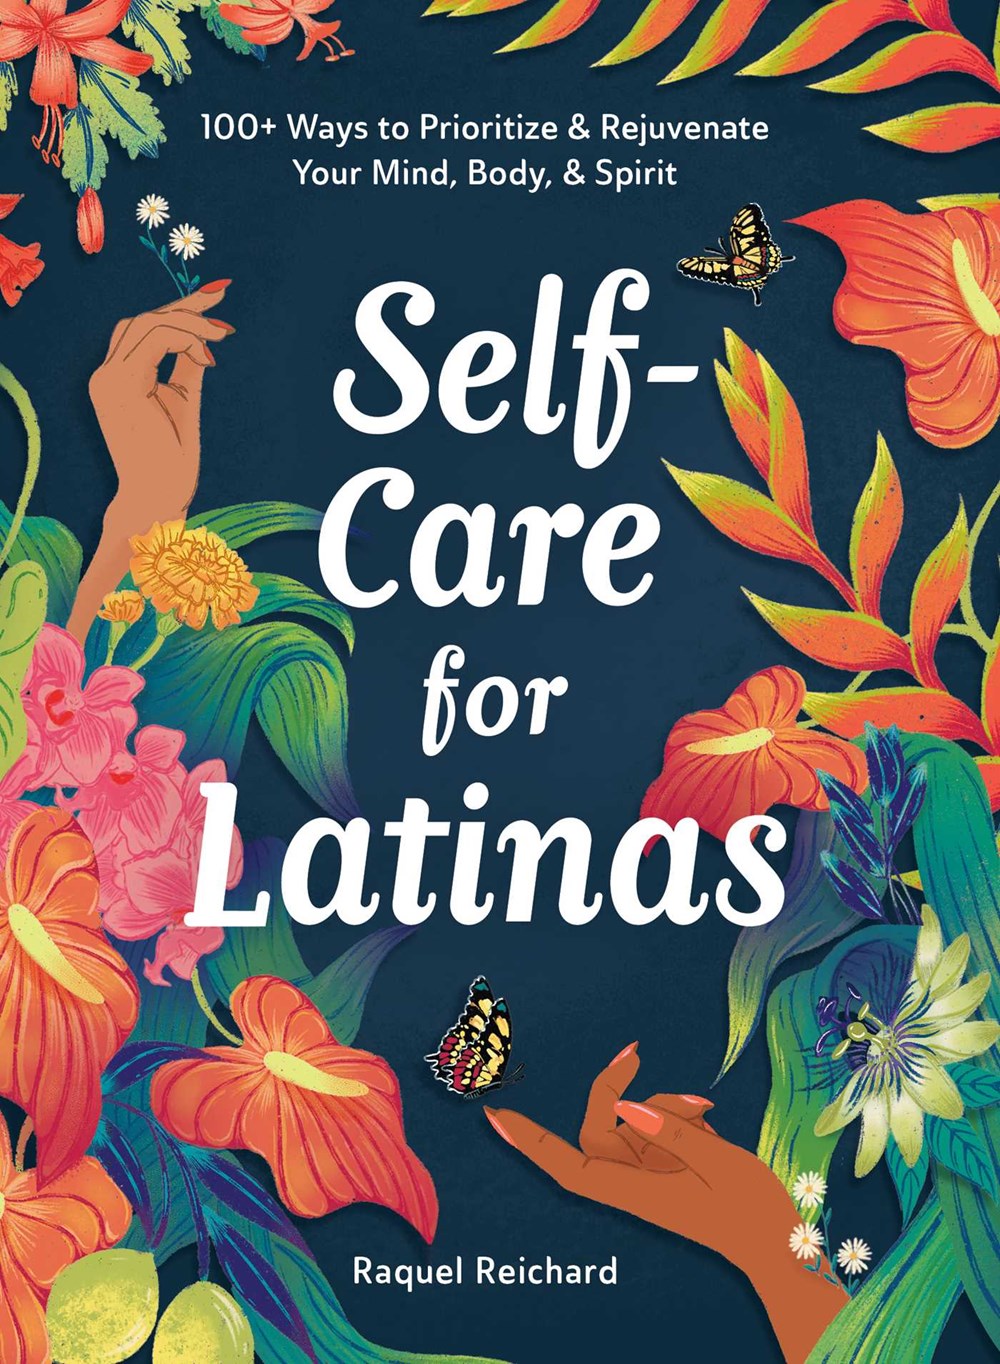 Self-Care for Latinas: 100+ Ways to Prioritize & Rejuvenate Your Mind, Body, & Spirit